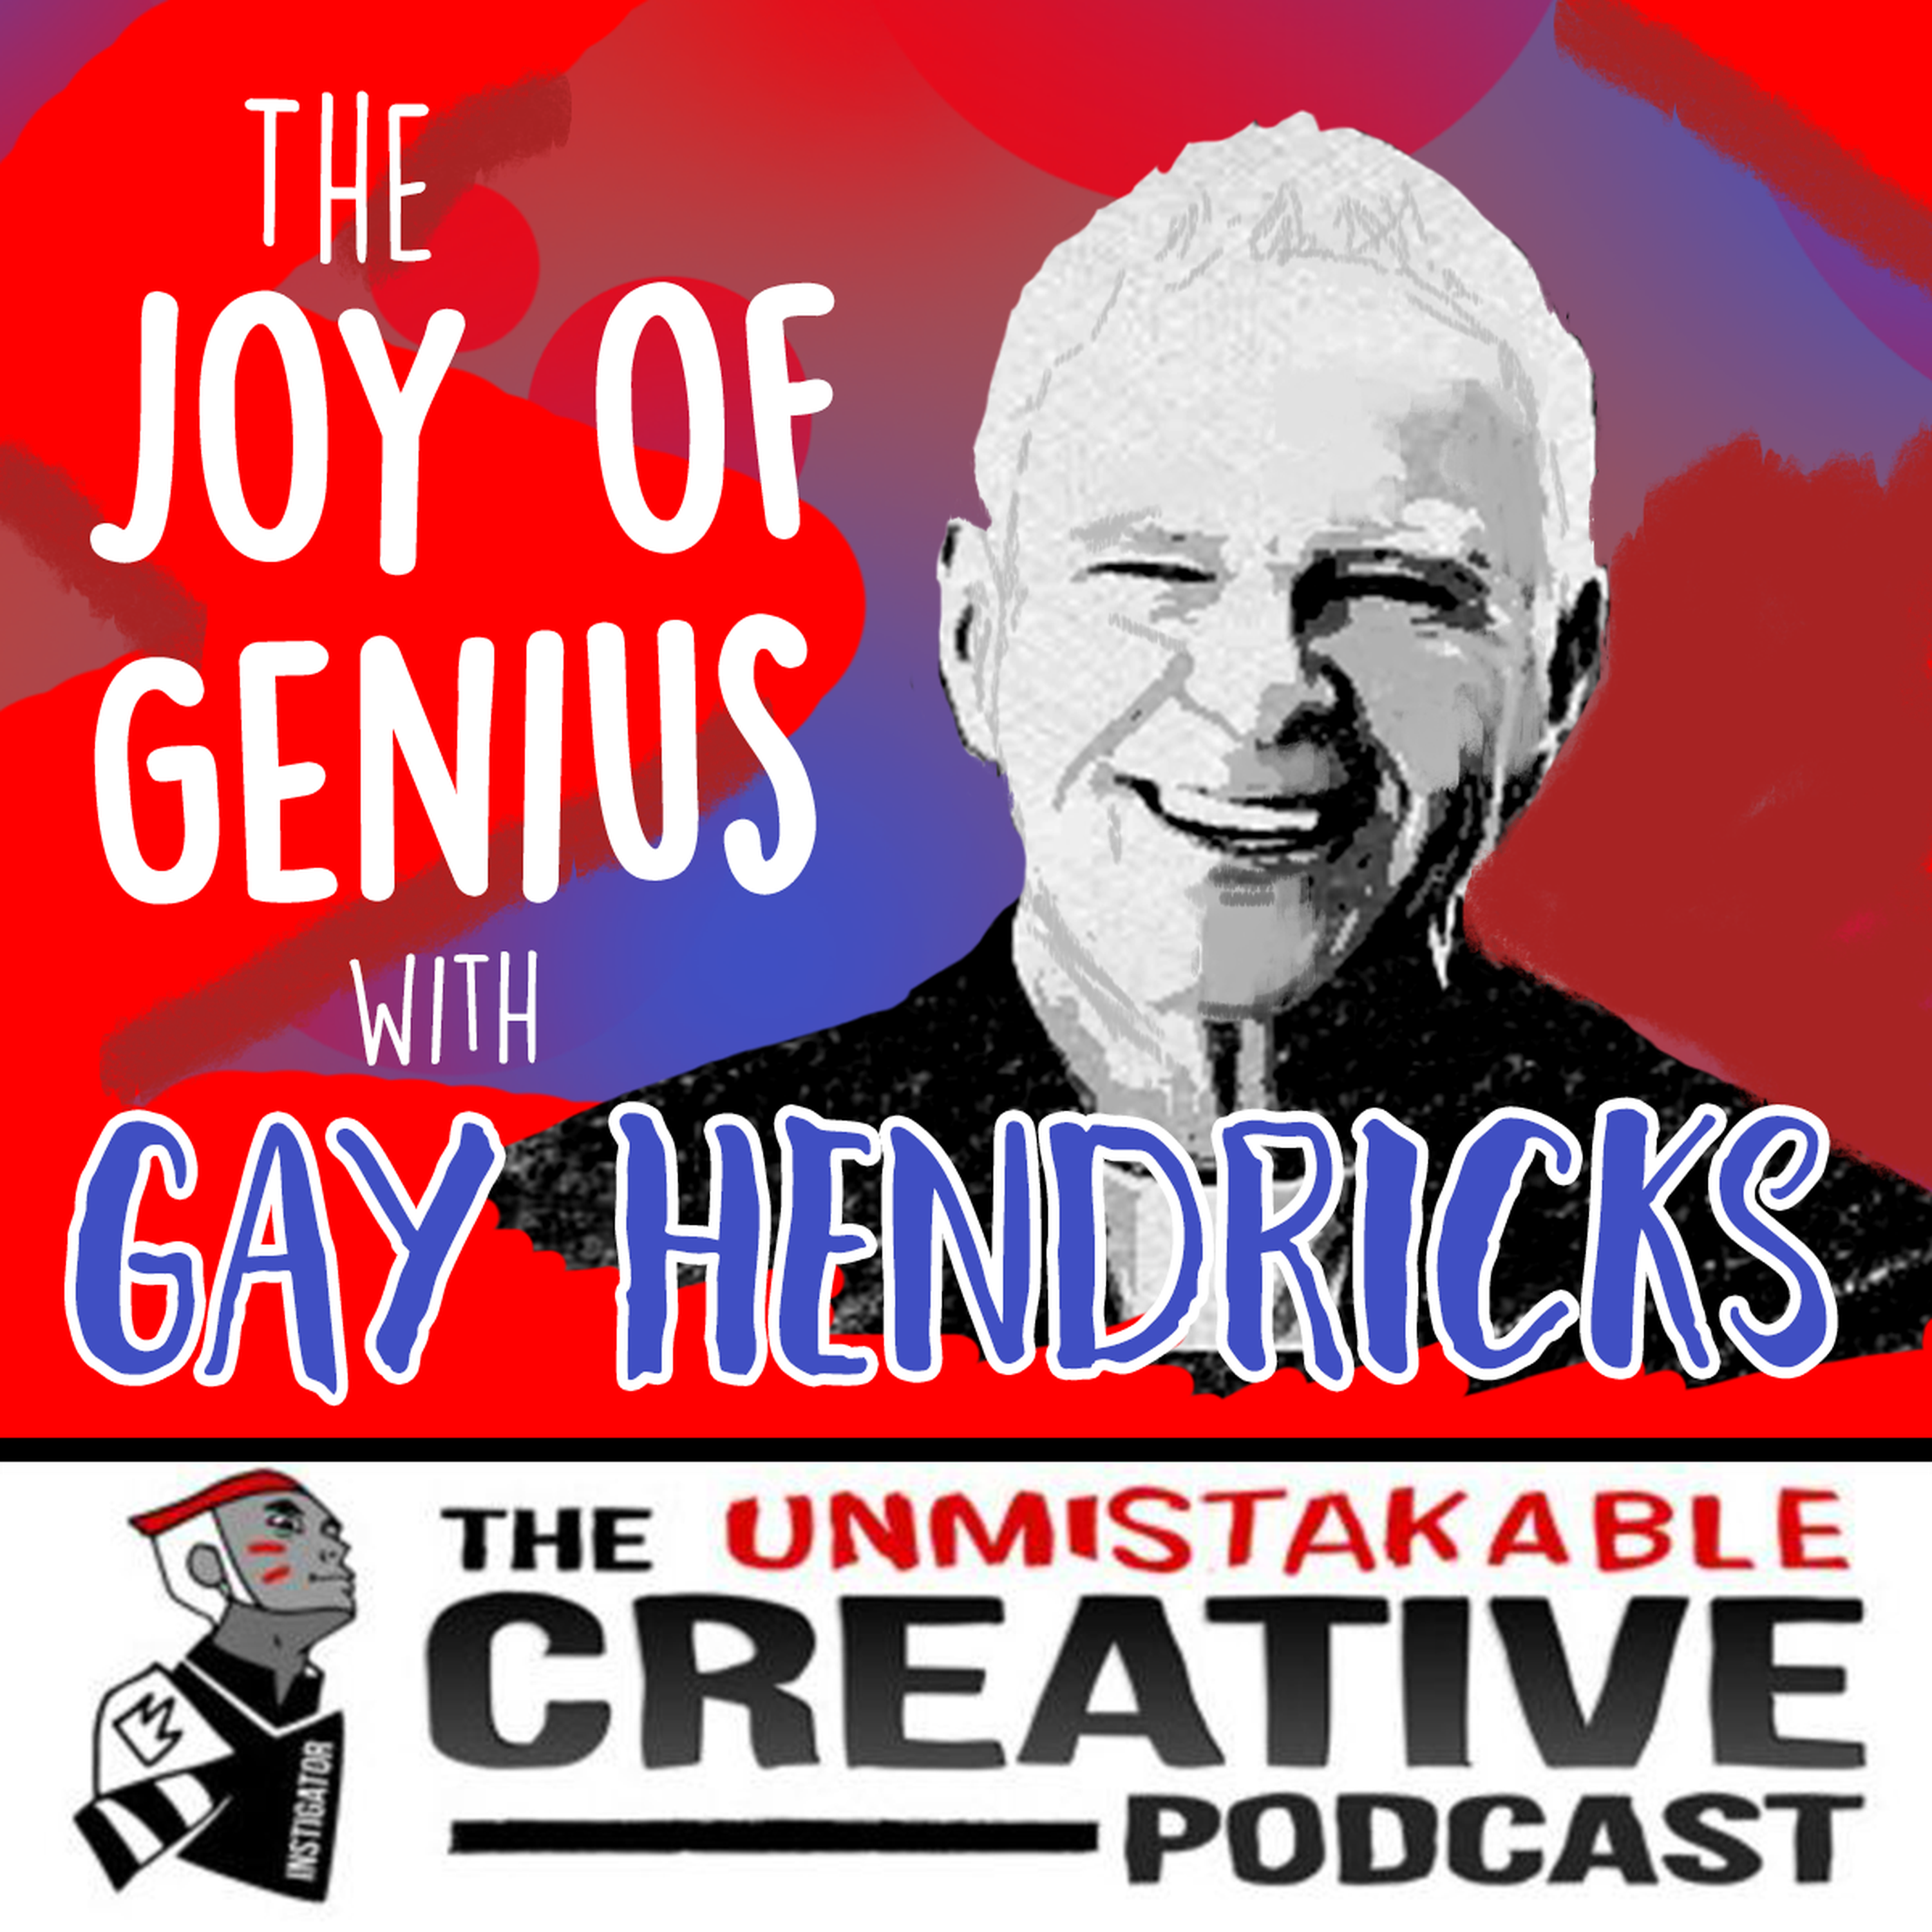 The Joy of Genius with Gay Hendricks Image